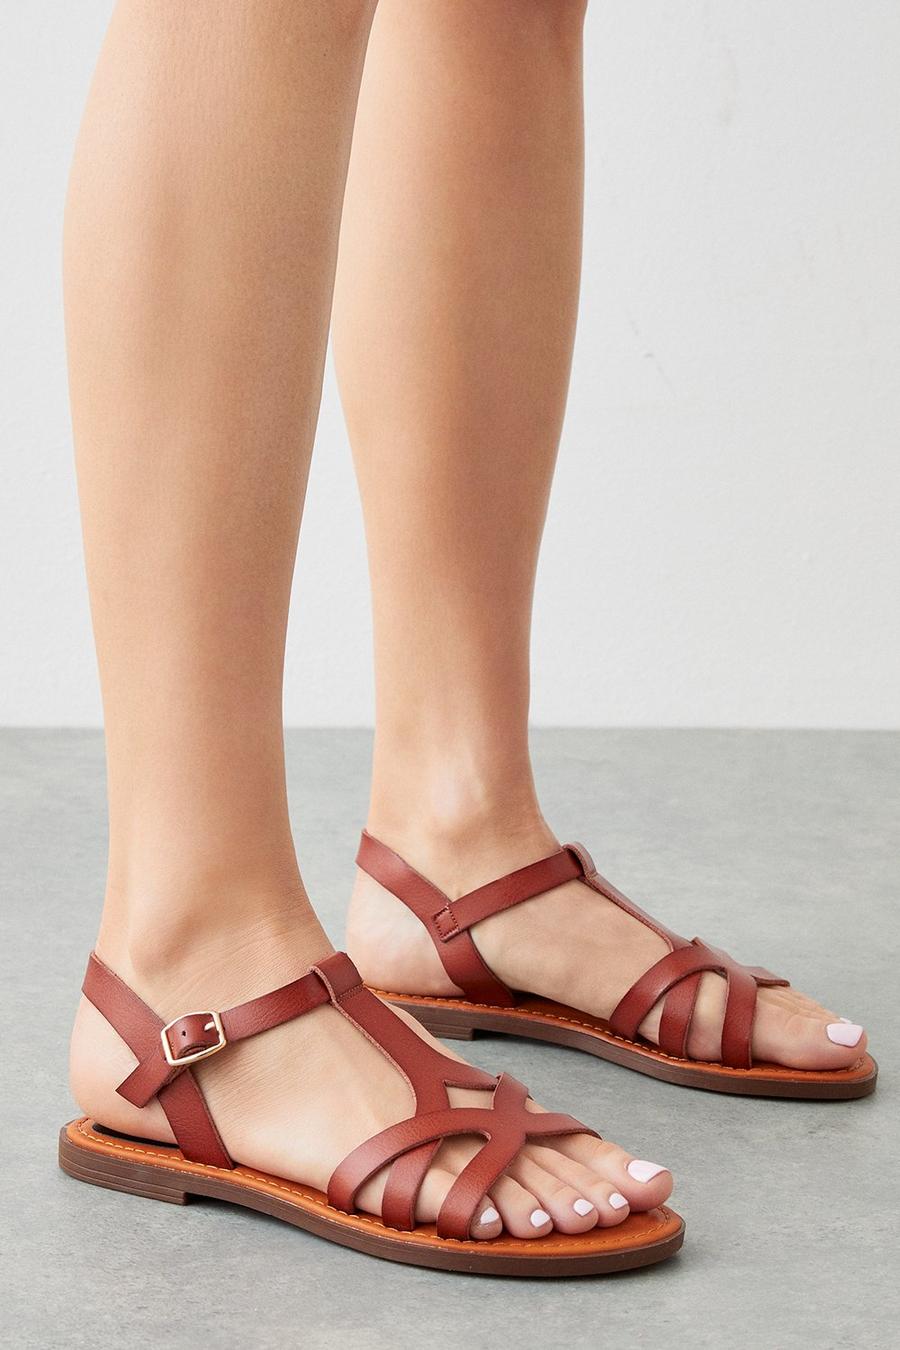 Good For The Sole: Megan Flexi Sole Flat Sandals